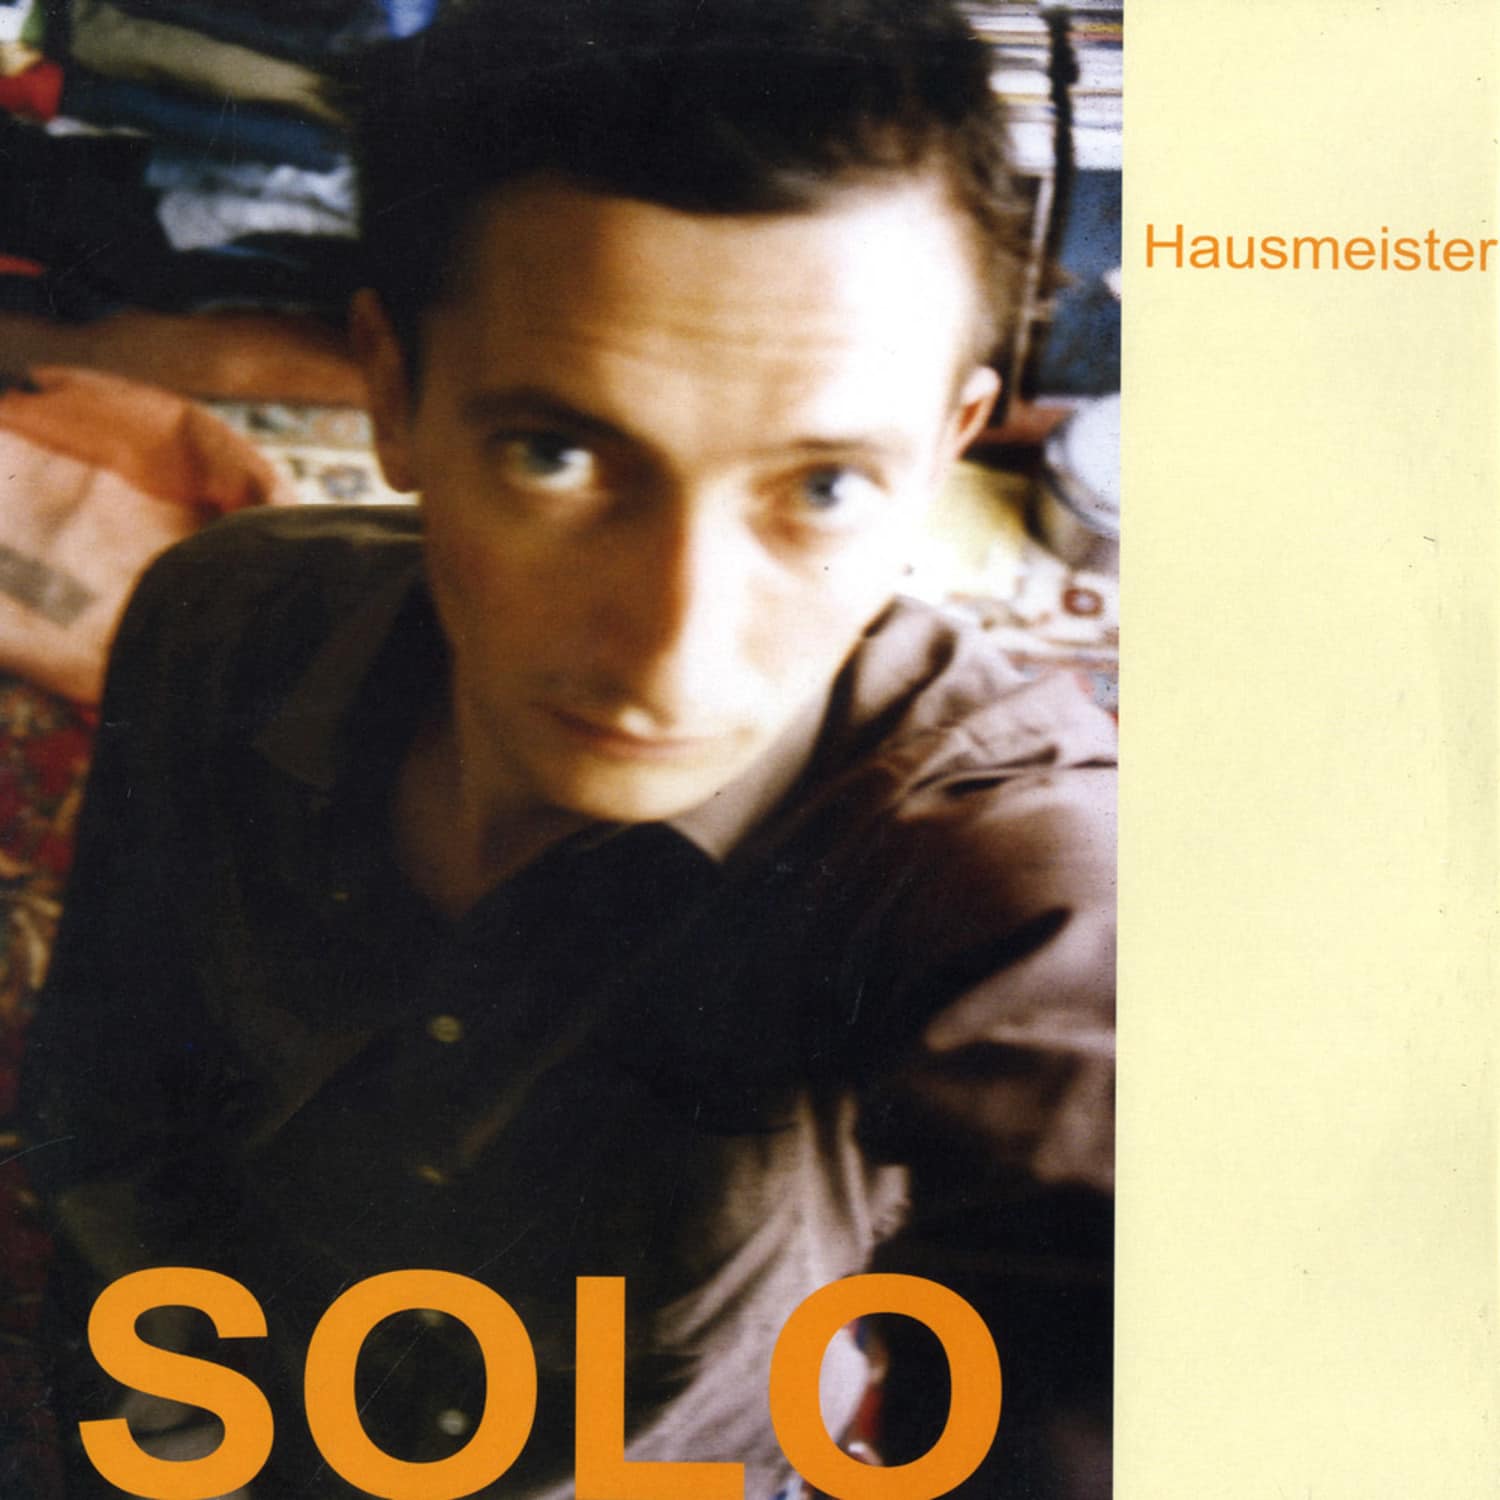 Hausmeister - SOLO 